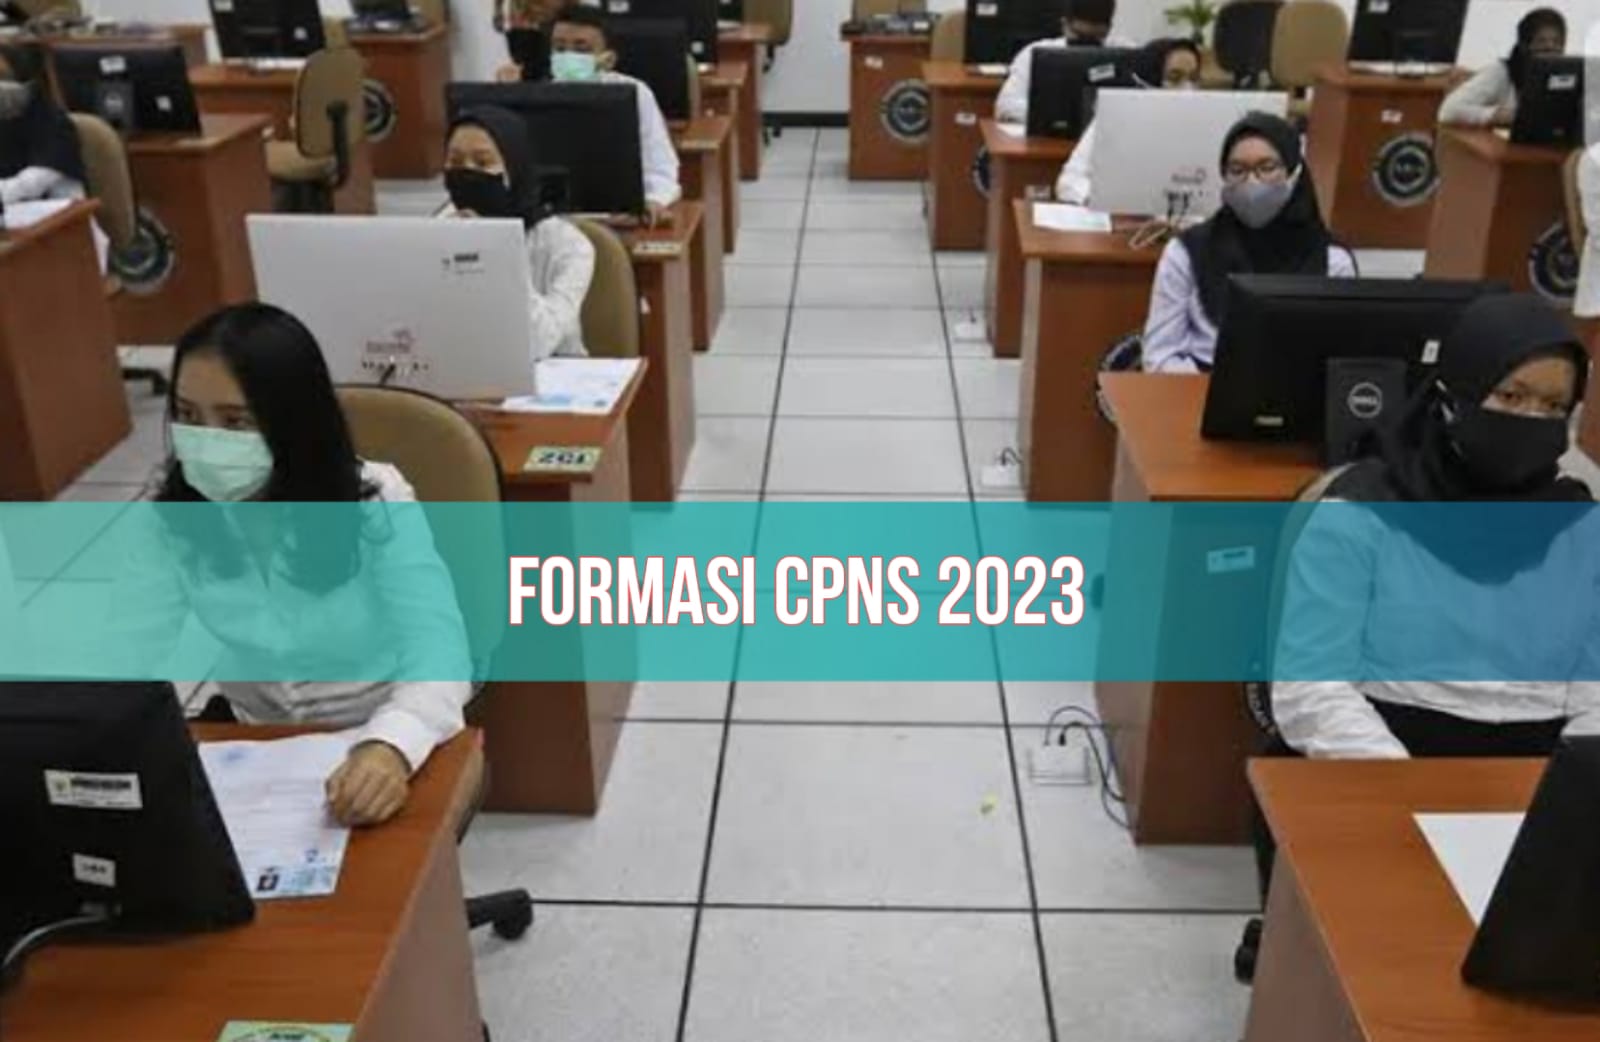 Dibuka Sebentar Lagi! Cek Syarat hingga Formasi CPNS 2023, Sudah Siap?